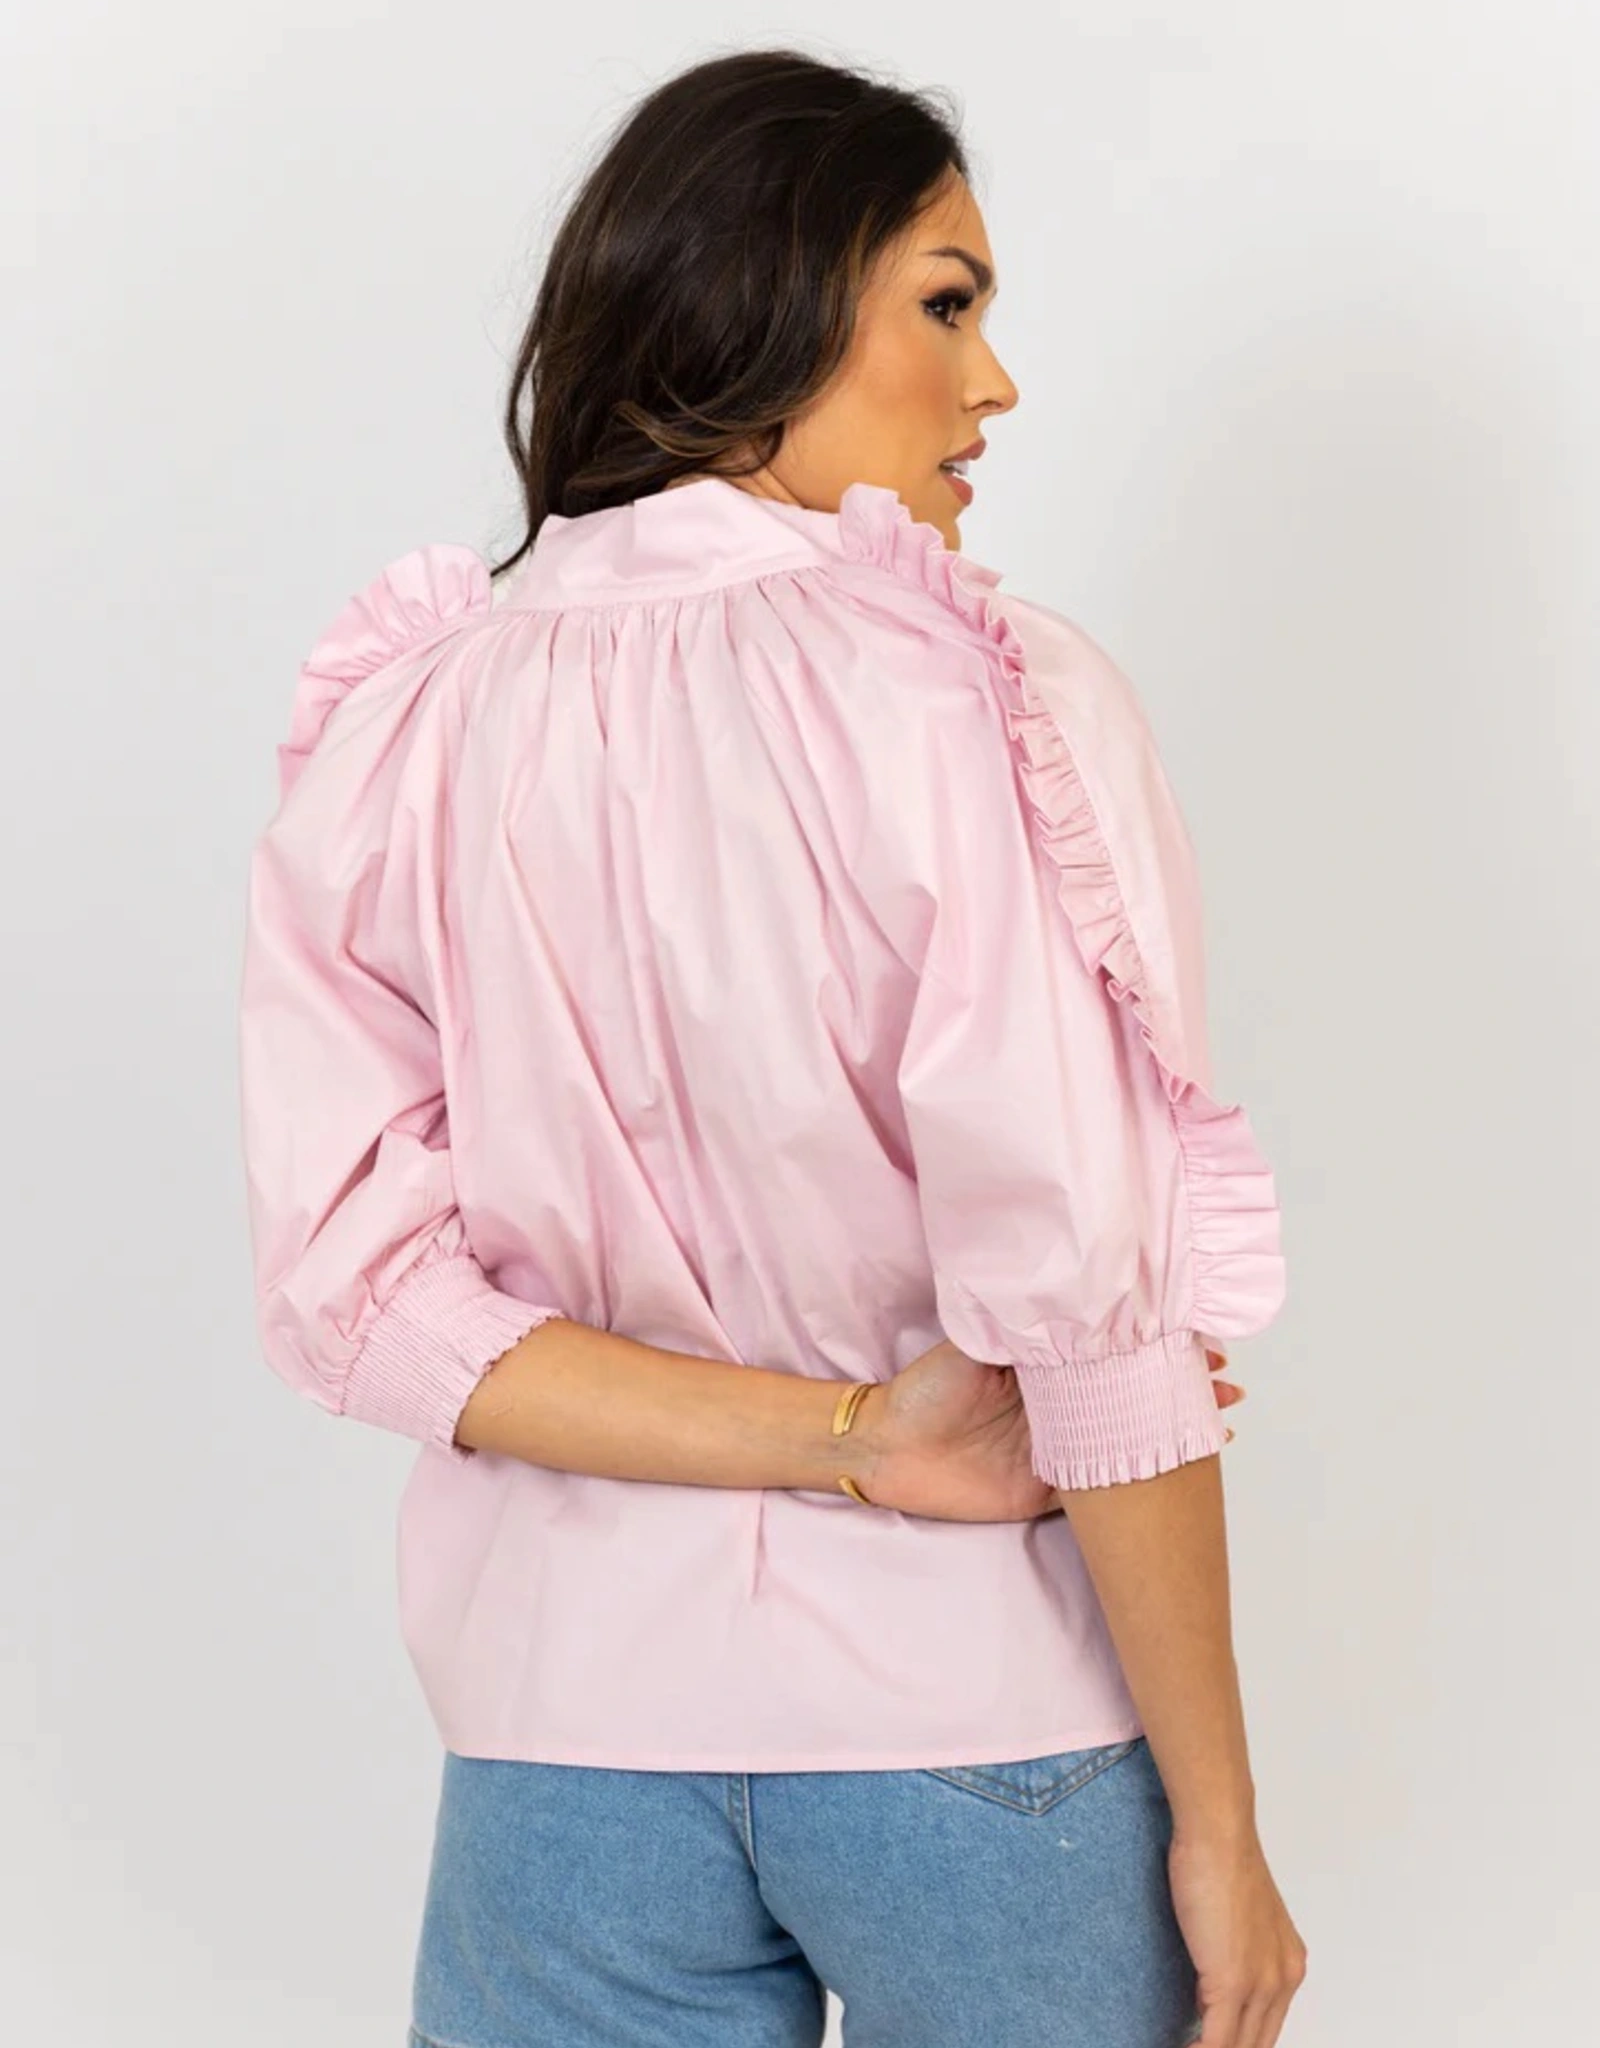 Buy PlusS Women Pink Top With Ruffles - Tops for Women 7419340